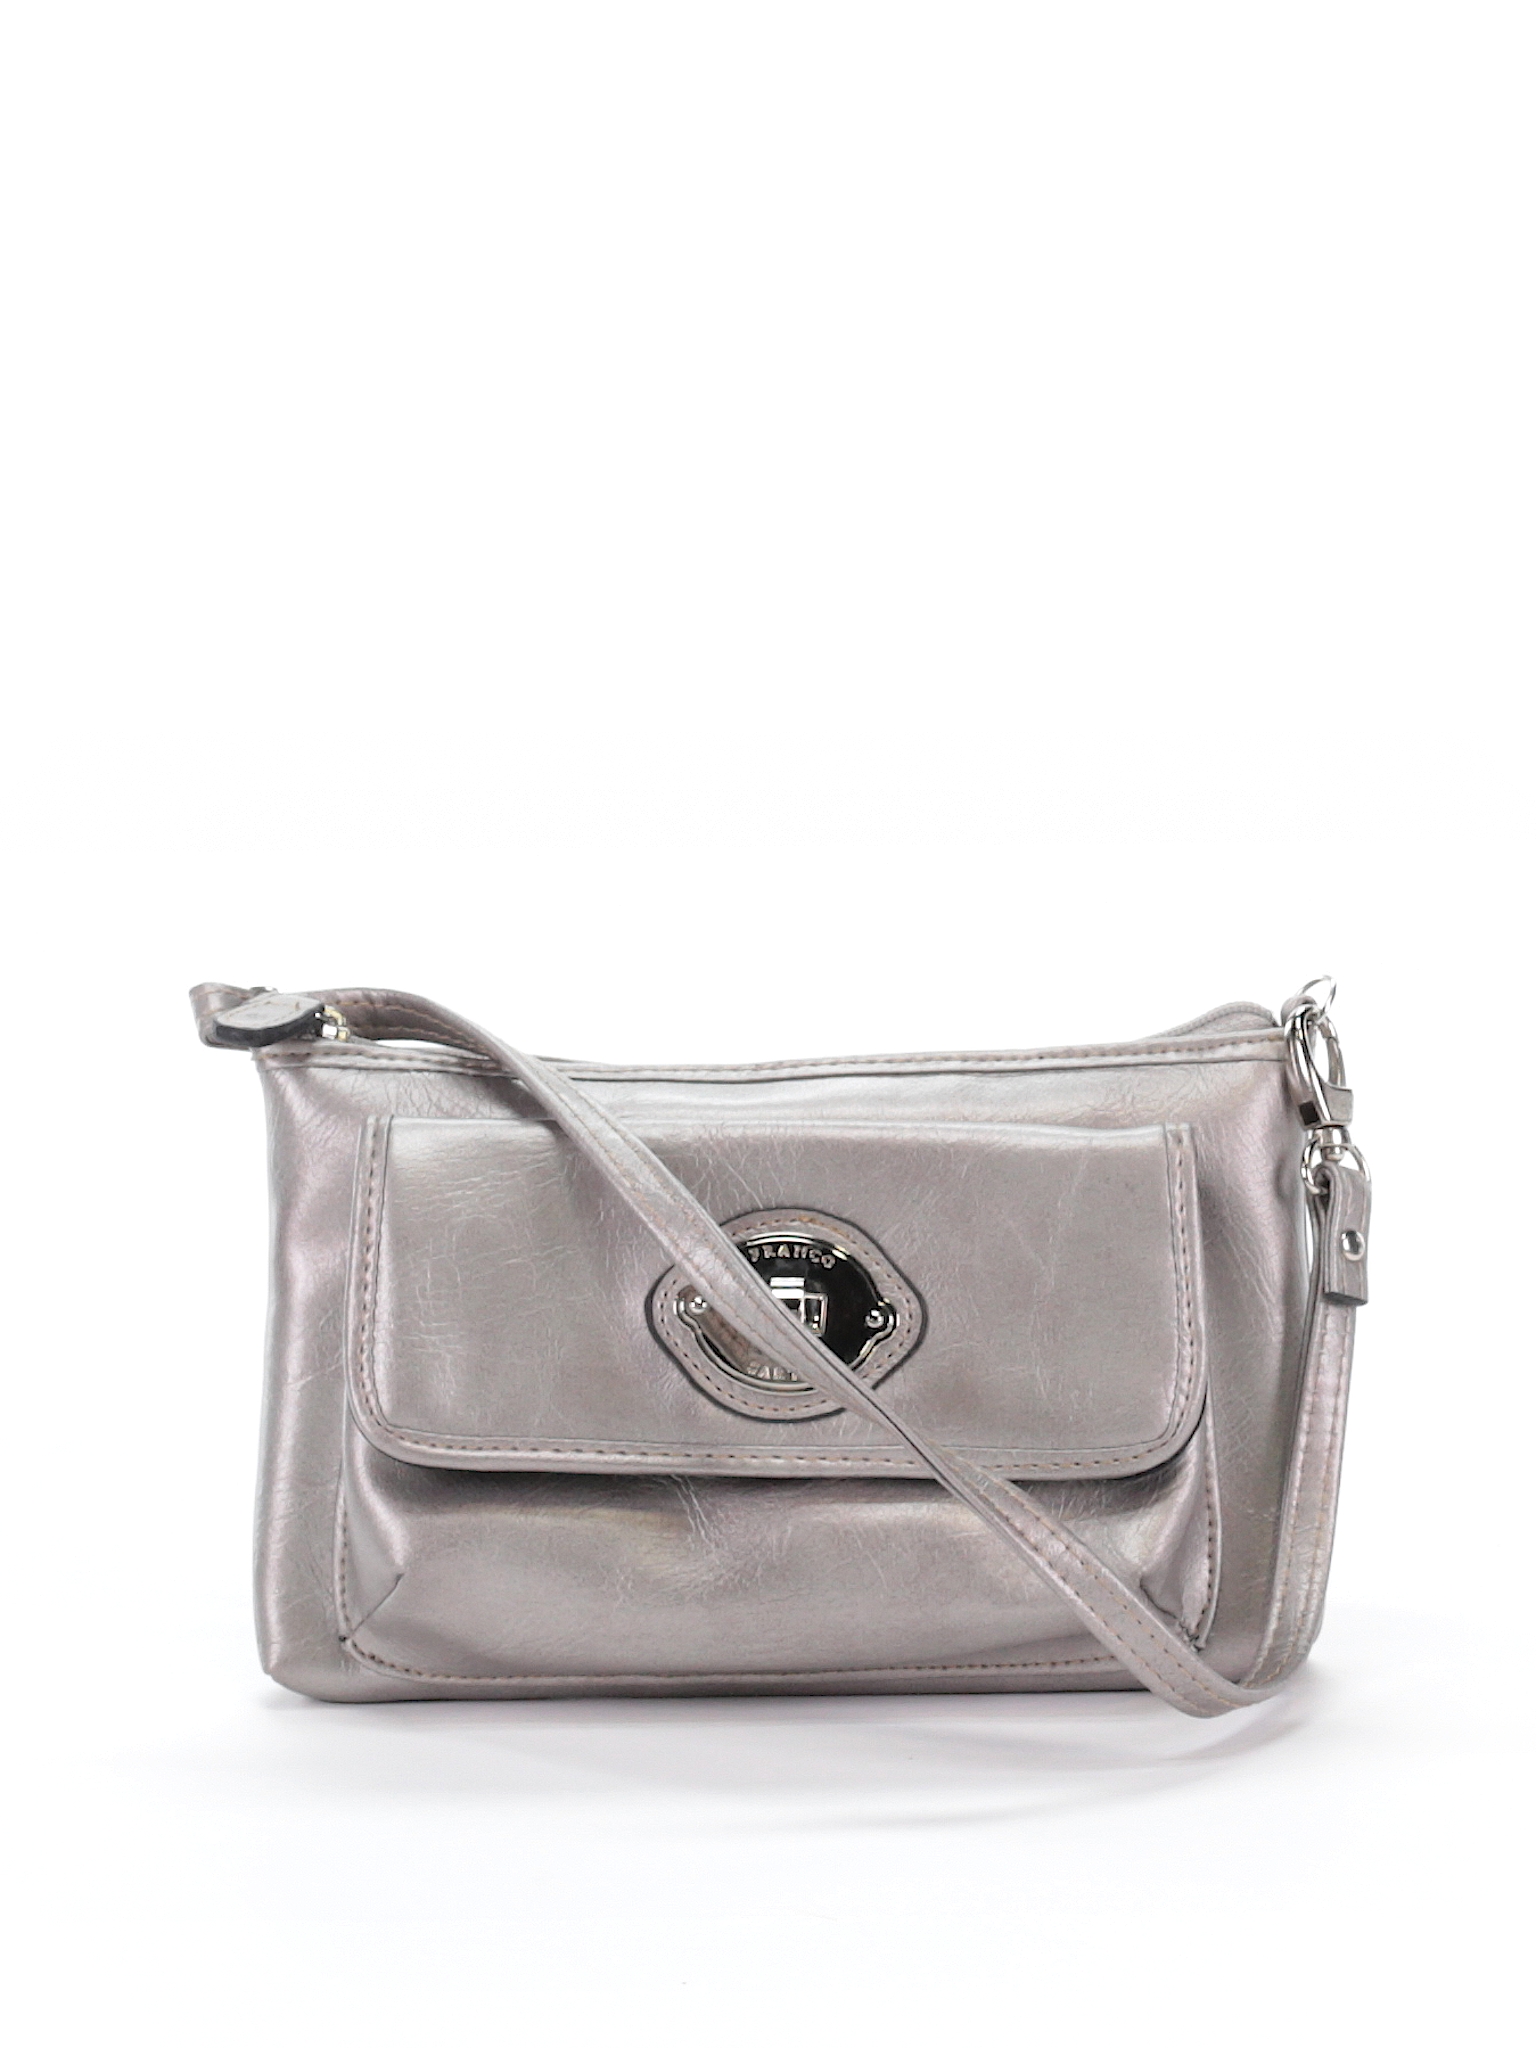 Franco Sarto Metallic Gray Shoulder Bag One Size - 90% off | thredUP